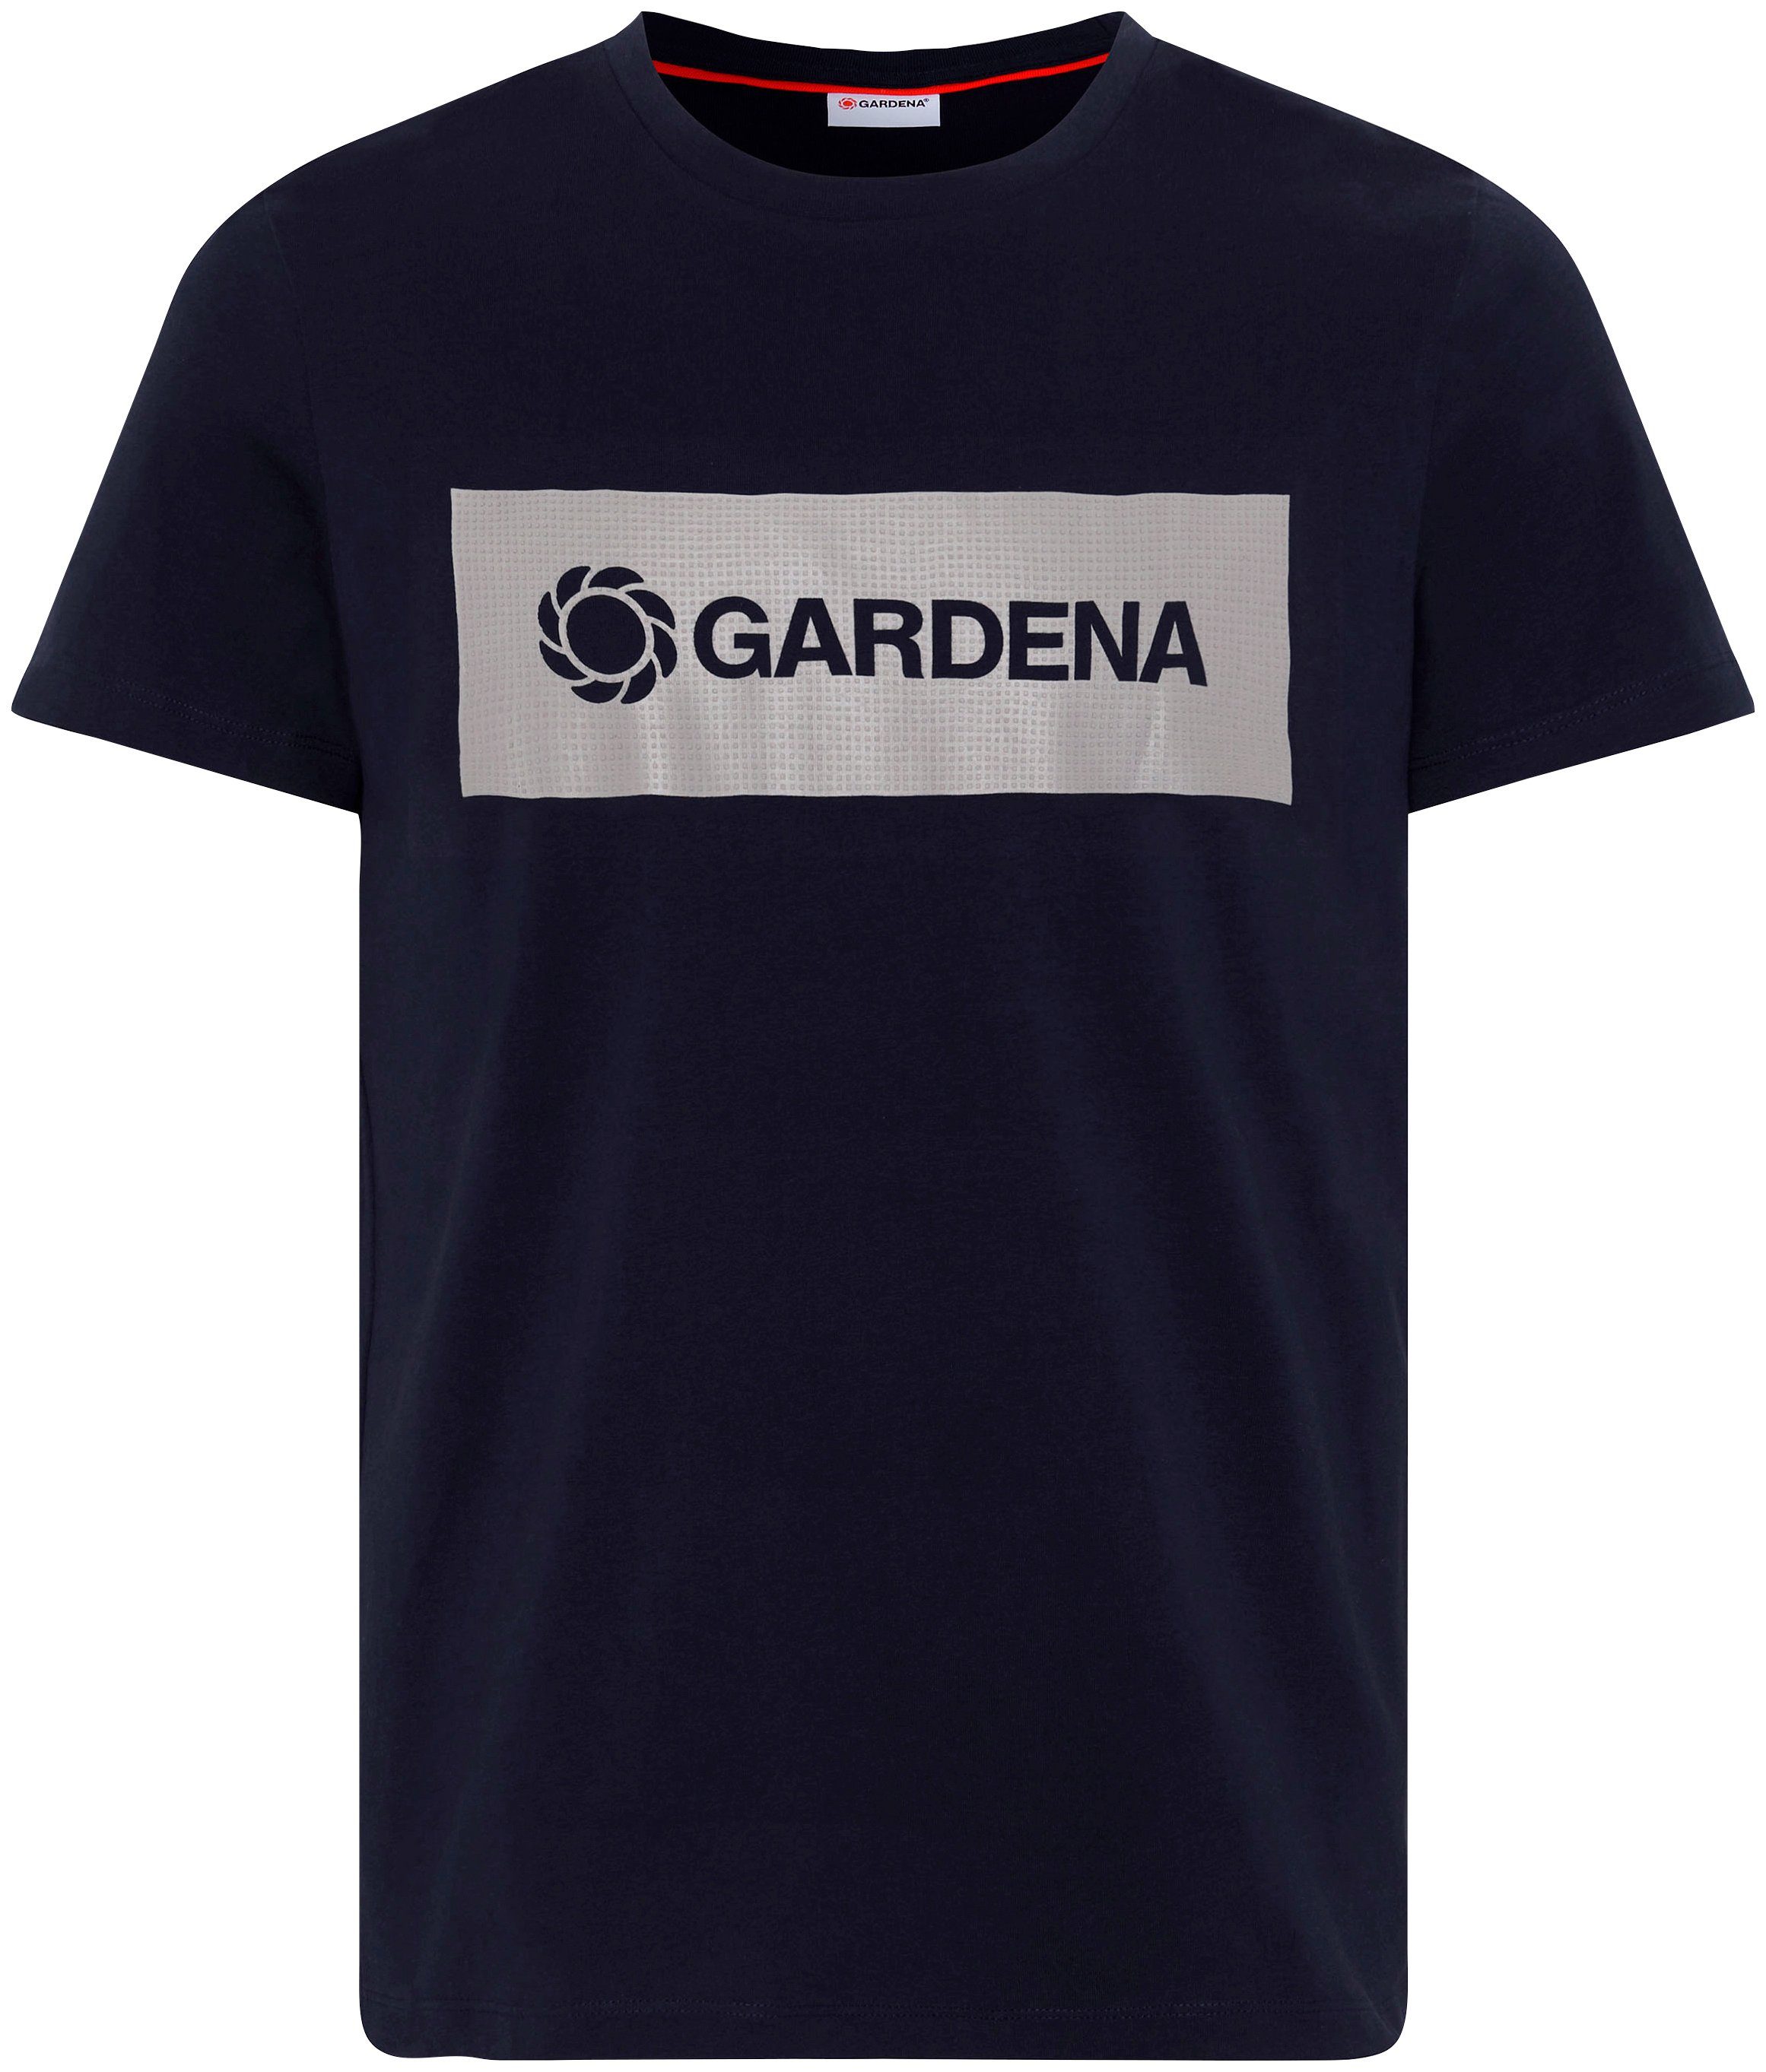 T-Shirt Sky GARDENA Night Gardena-Logodruck mit